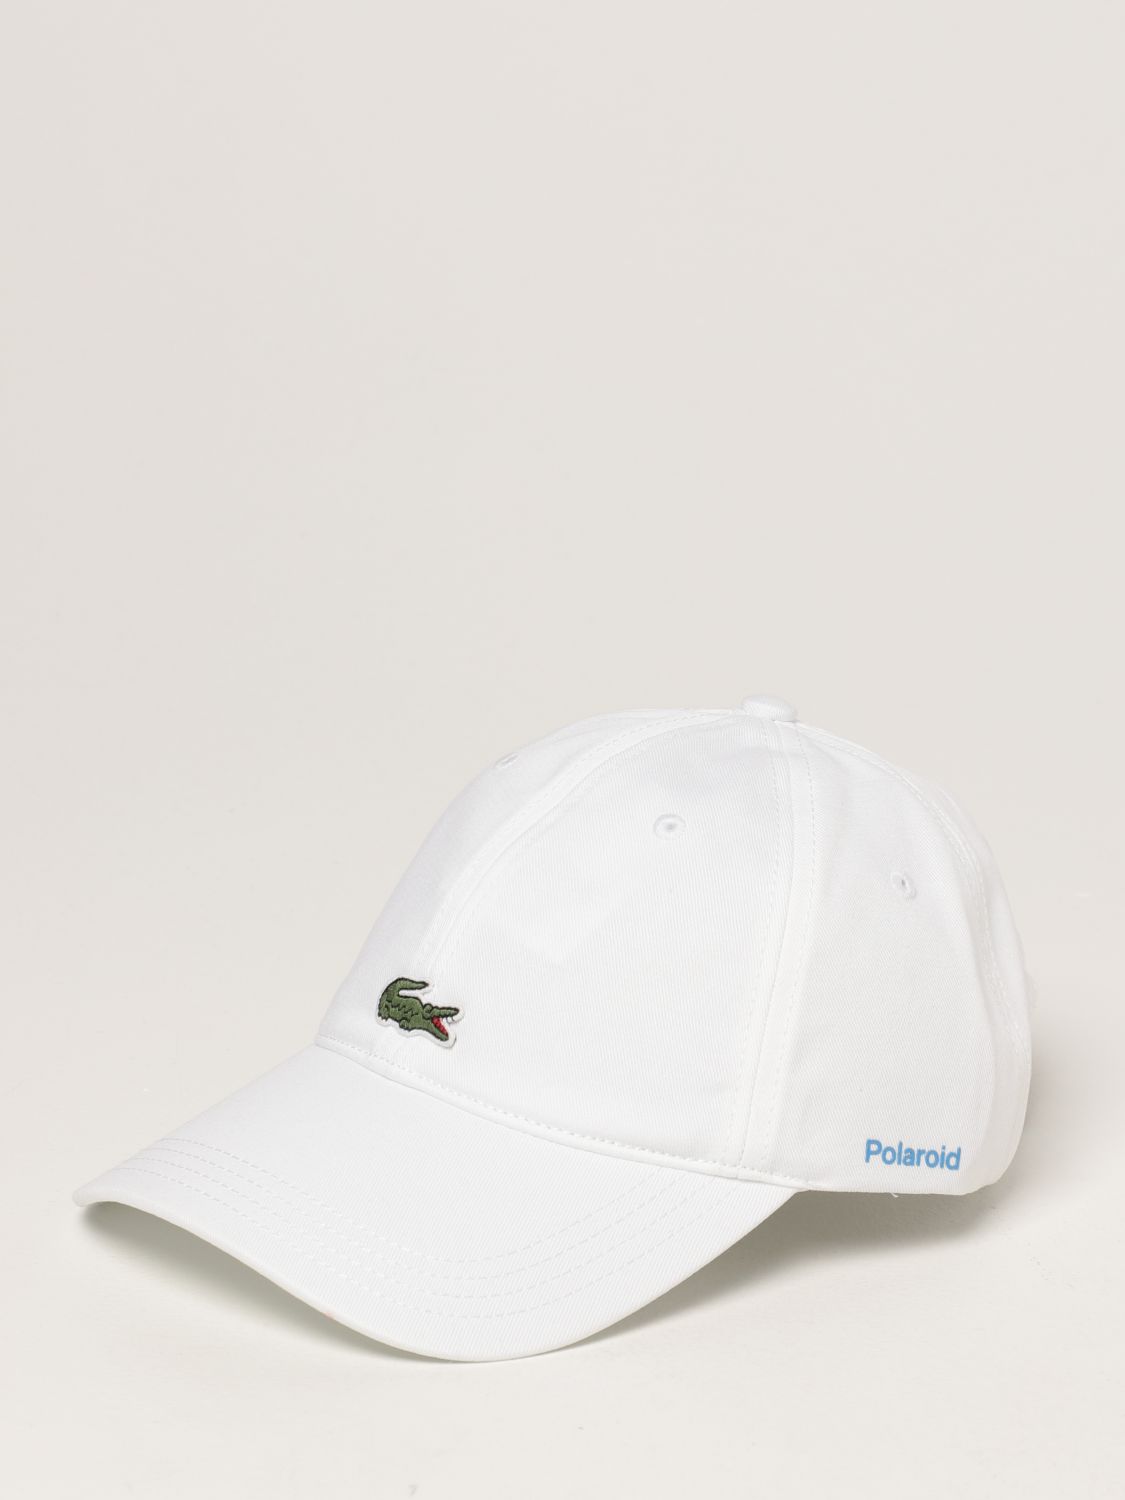 rolle Velsigne At bidrage LACOSTE X POLAROID: hat for man - White | Lacoste X Polaroid hat RK3381  online on GIGLIO.COM